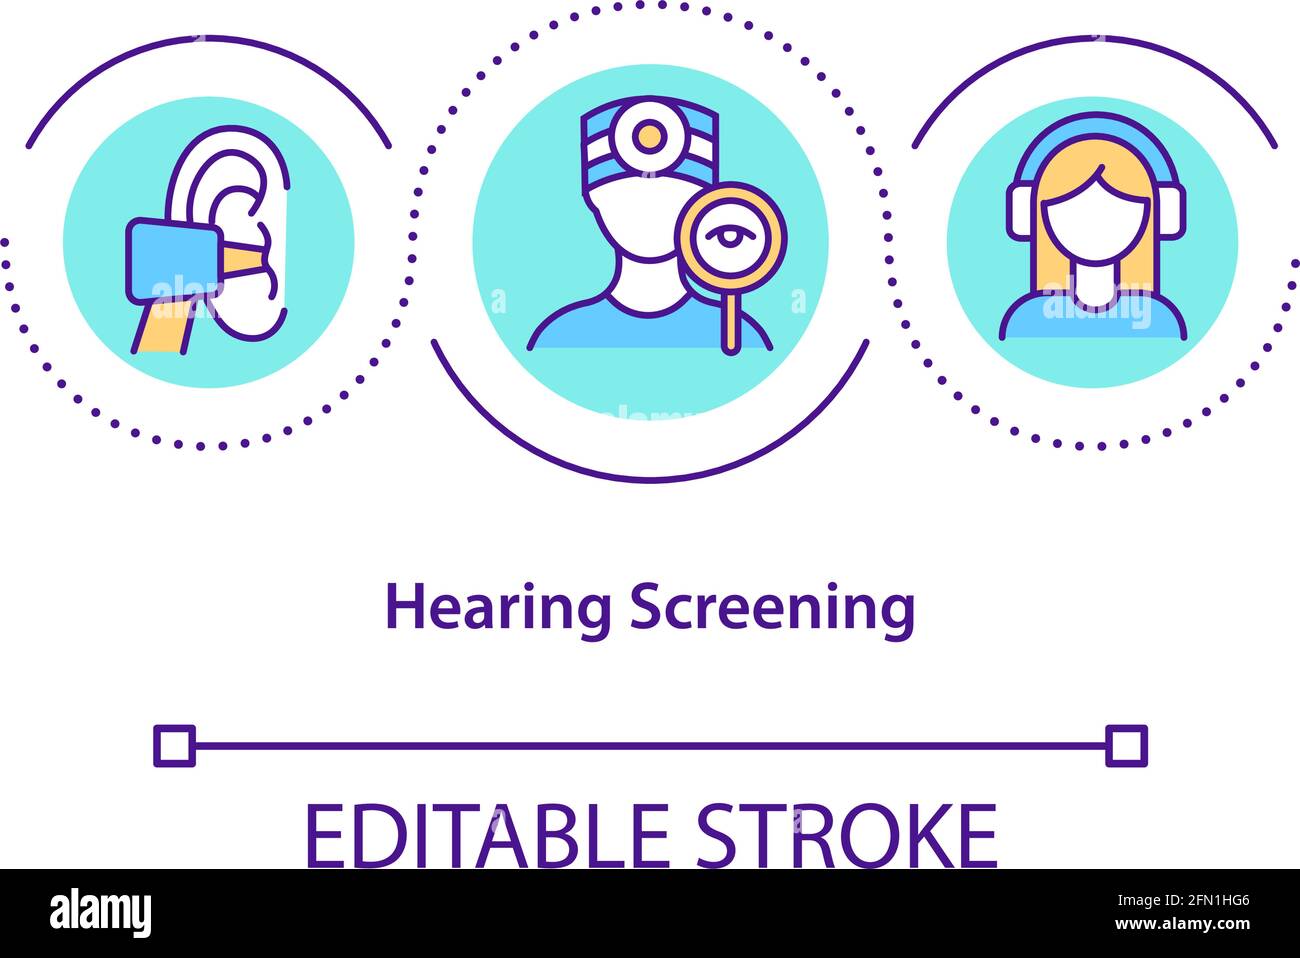 Hearing screening concept icon Stock Vector